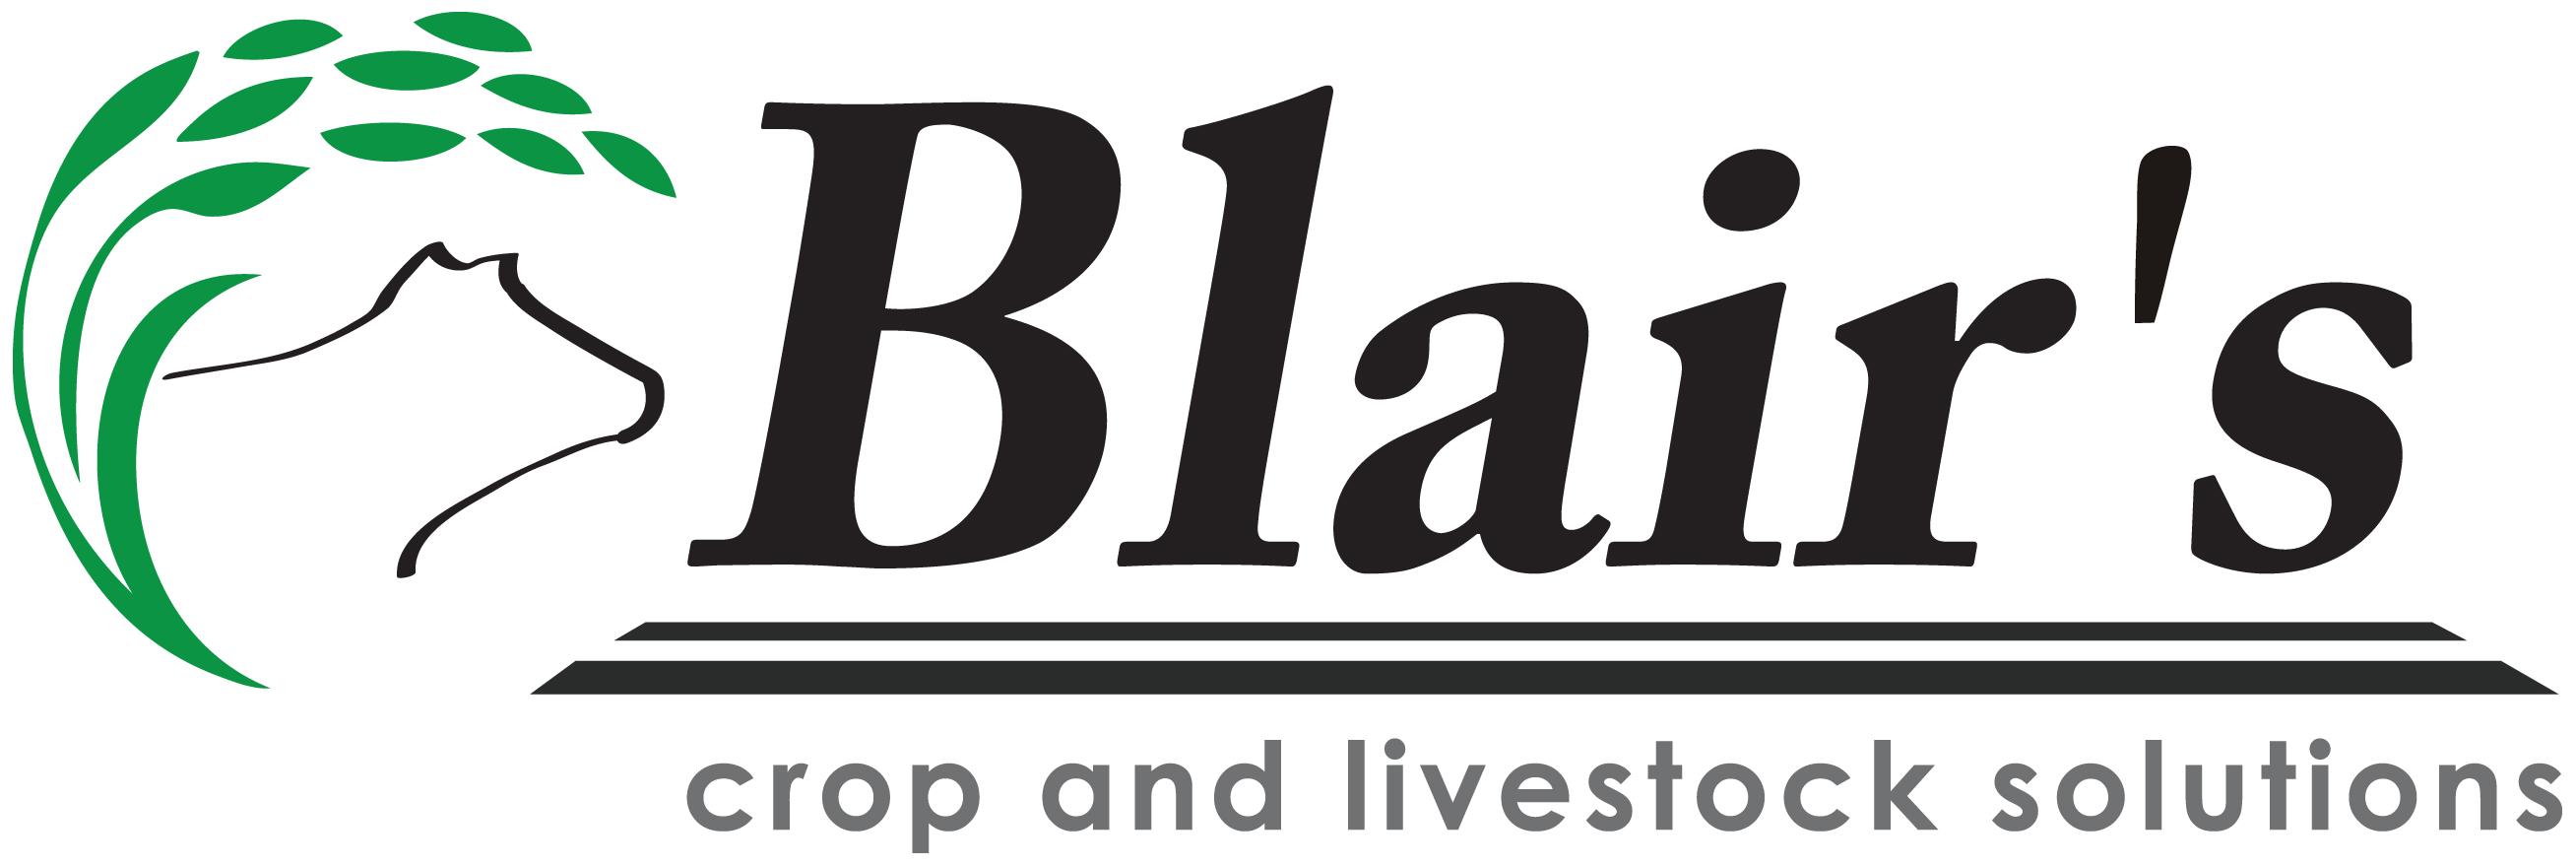 Livestock Logo - Blairs crop and livestock new logo | Blairs